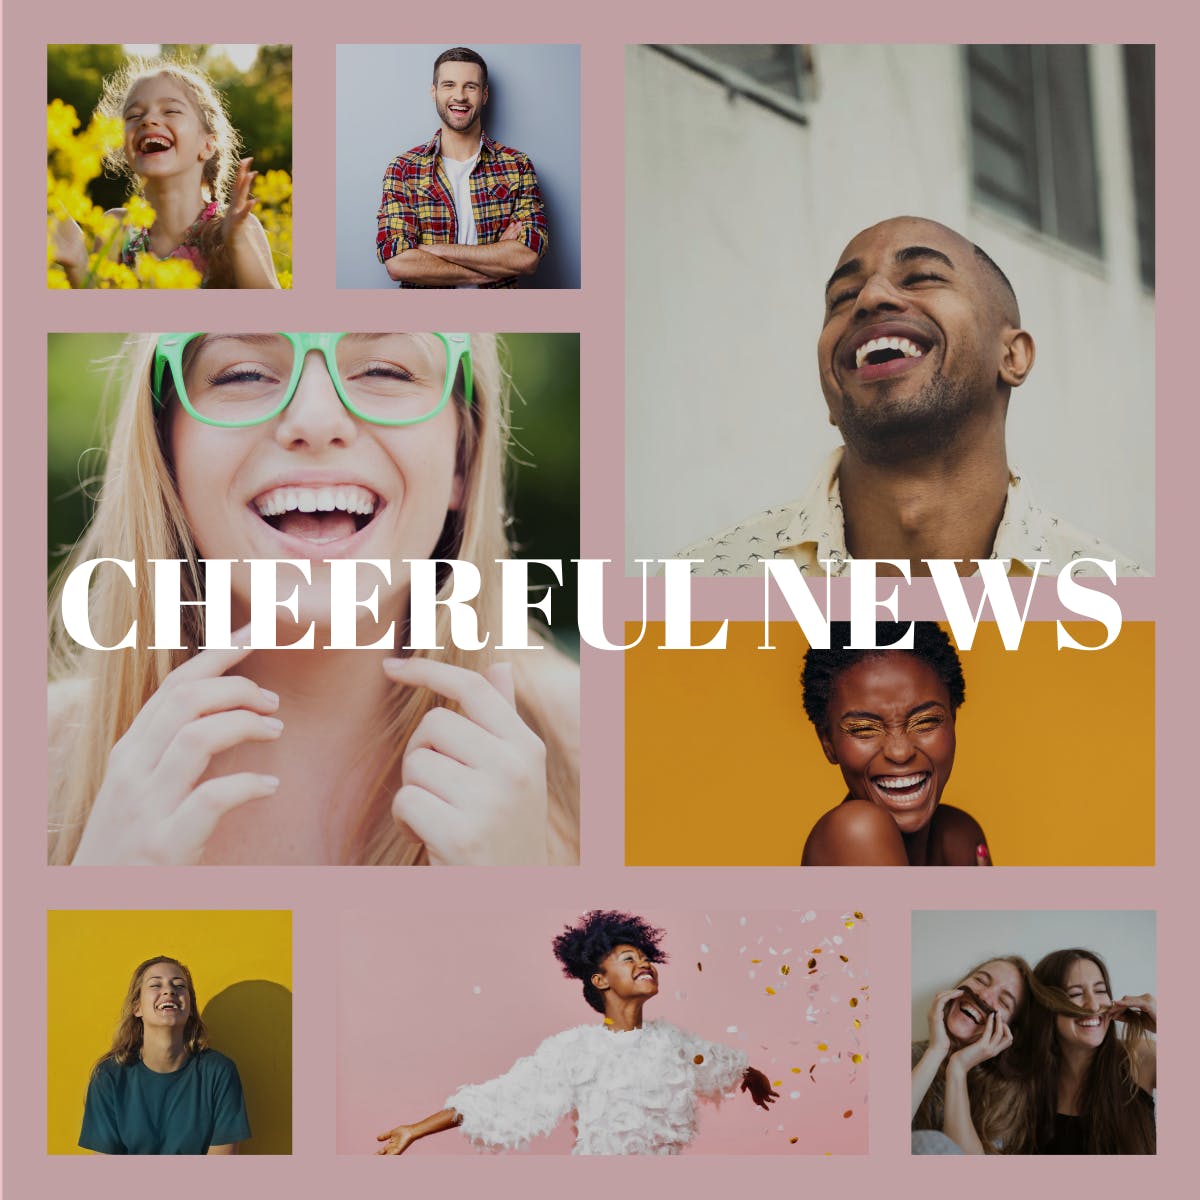 Cheerful News media 1